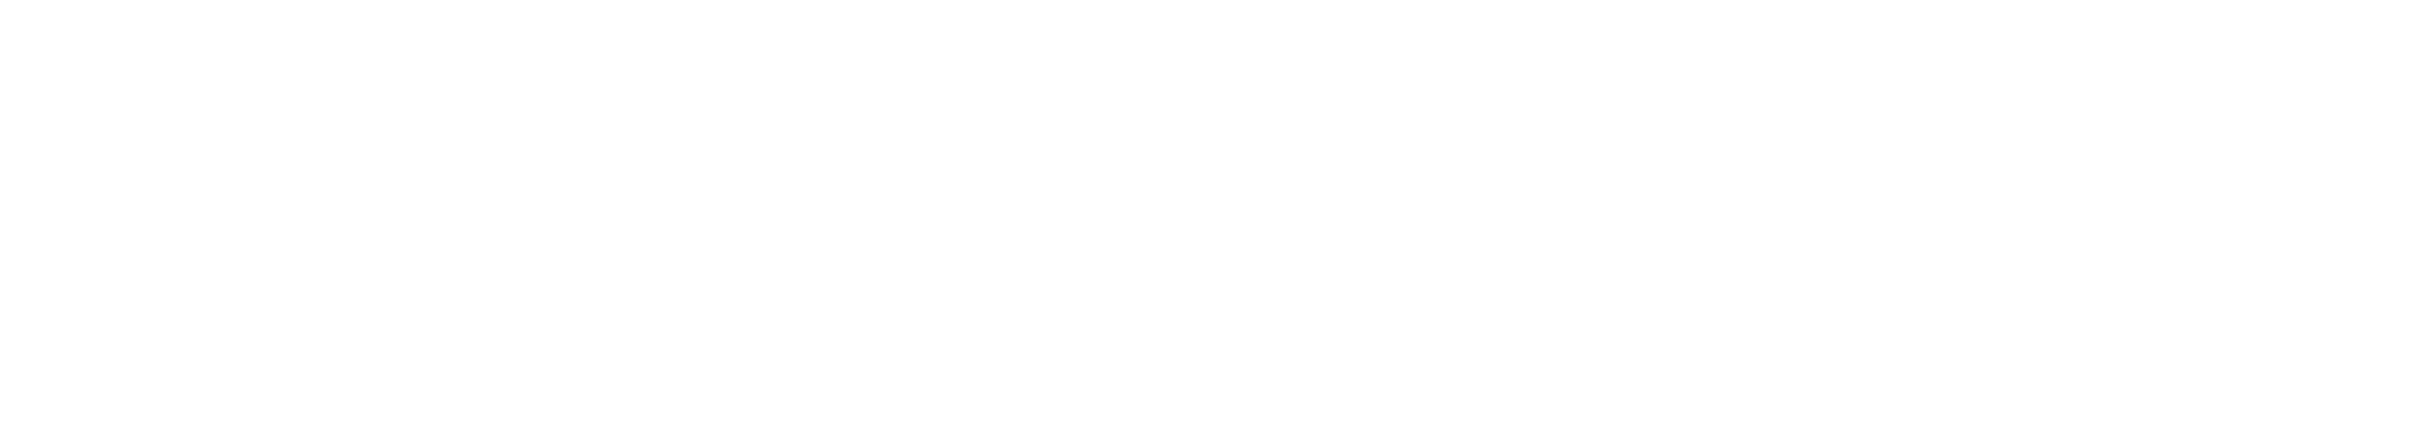 Flexwage logo